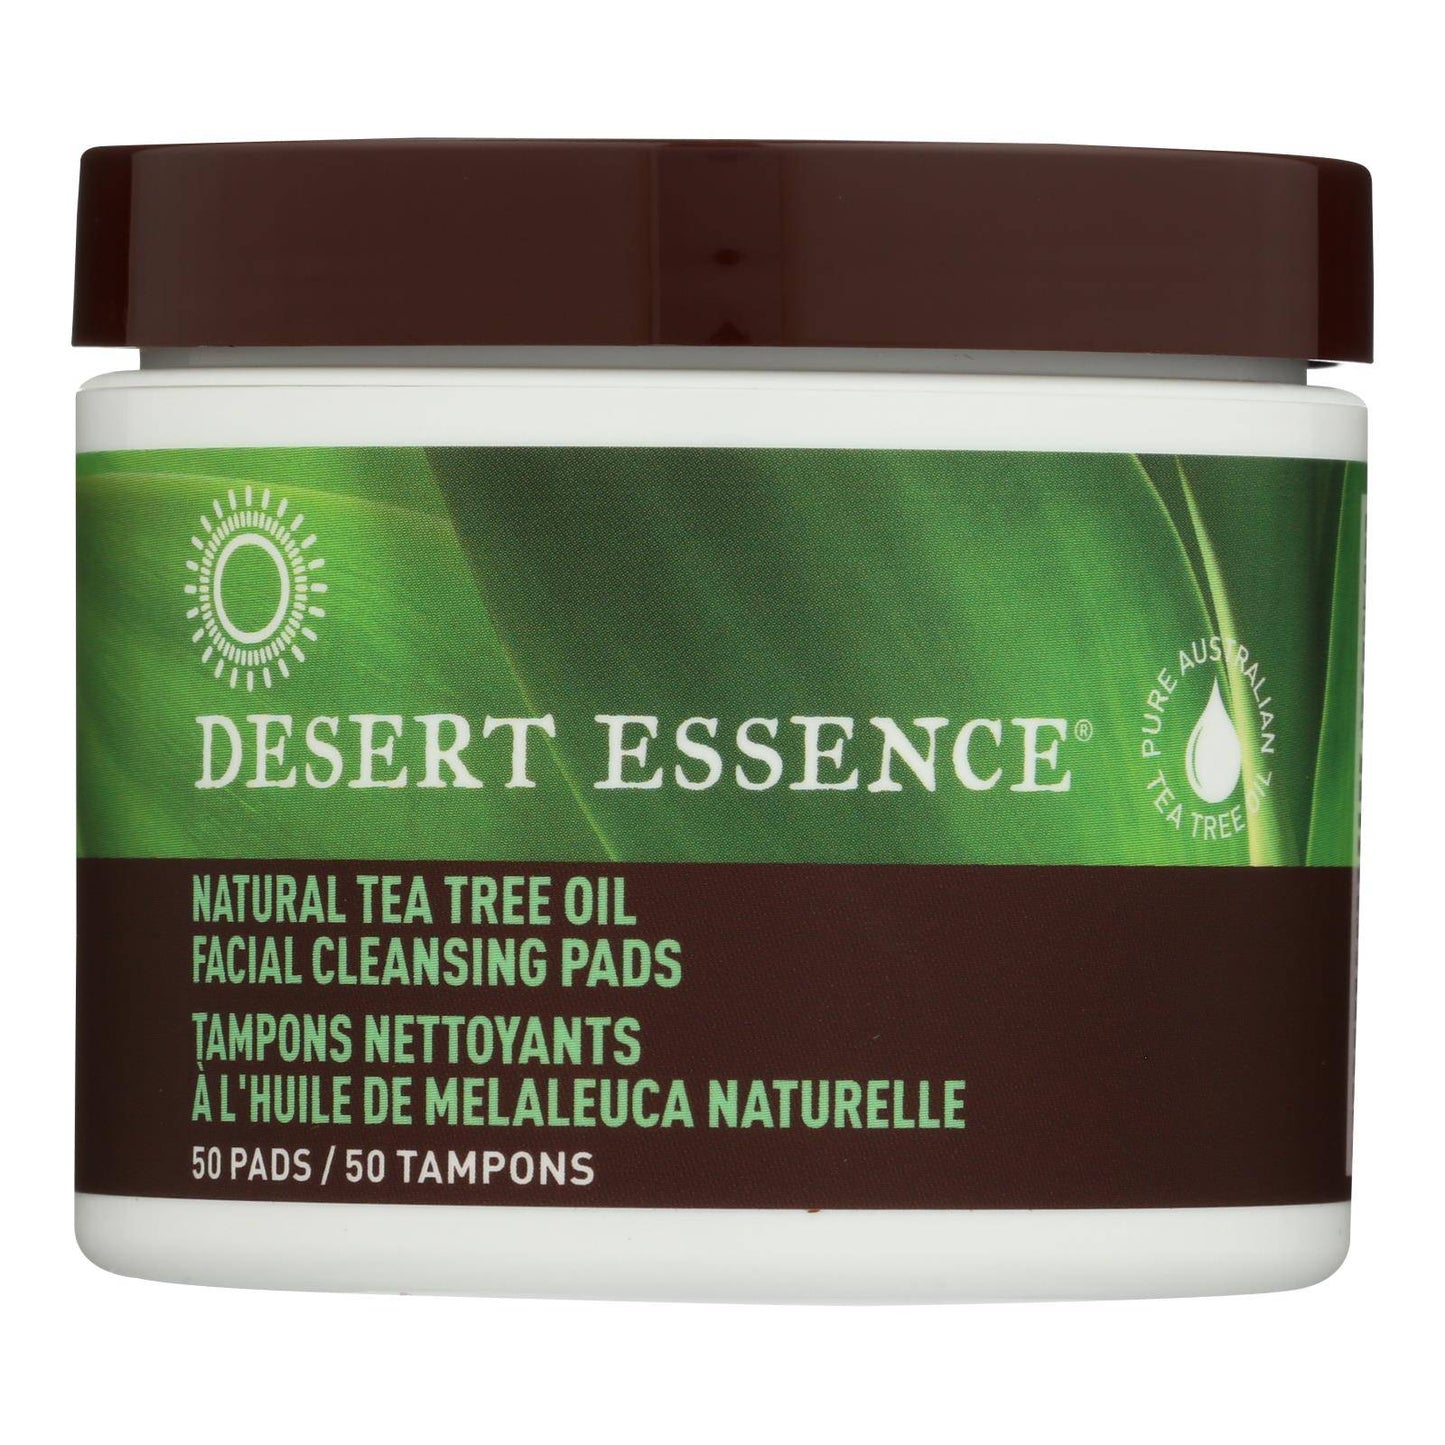 Desert Essence - Natural Tea Tree Oil Facial Cleansing Pads - Original - 50 Pads | OnlyNaturals.us